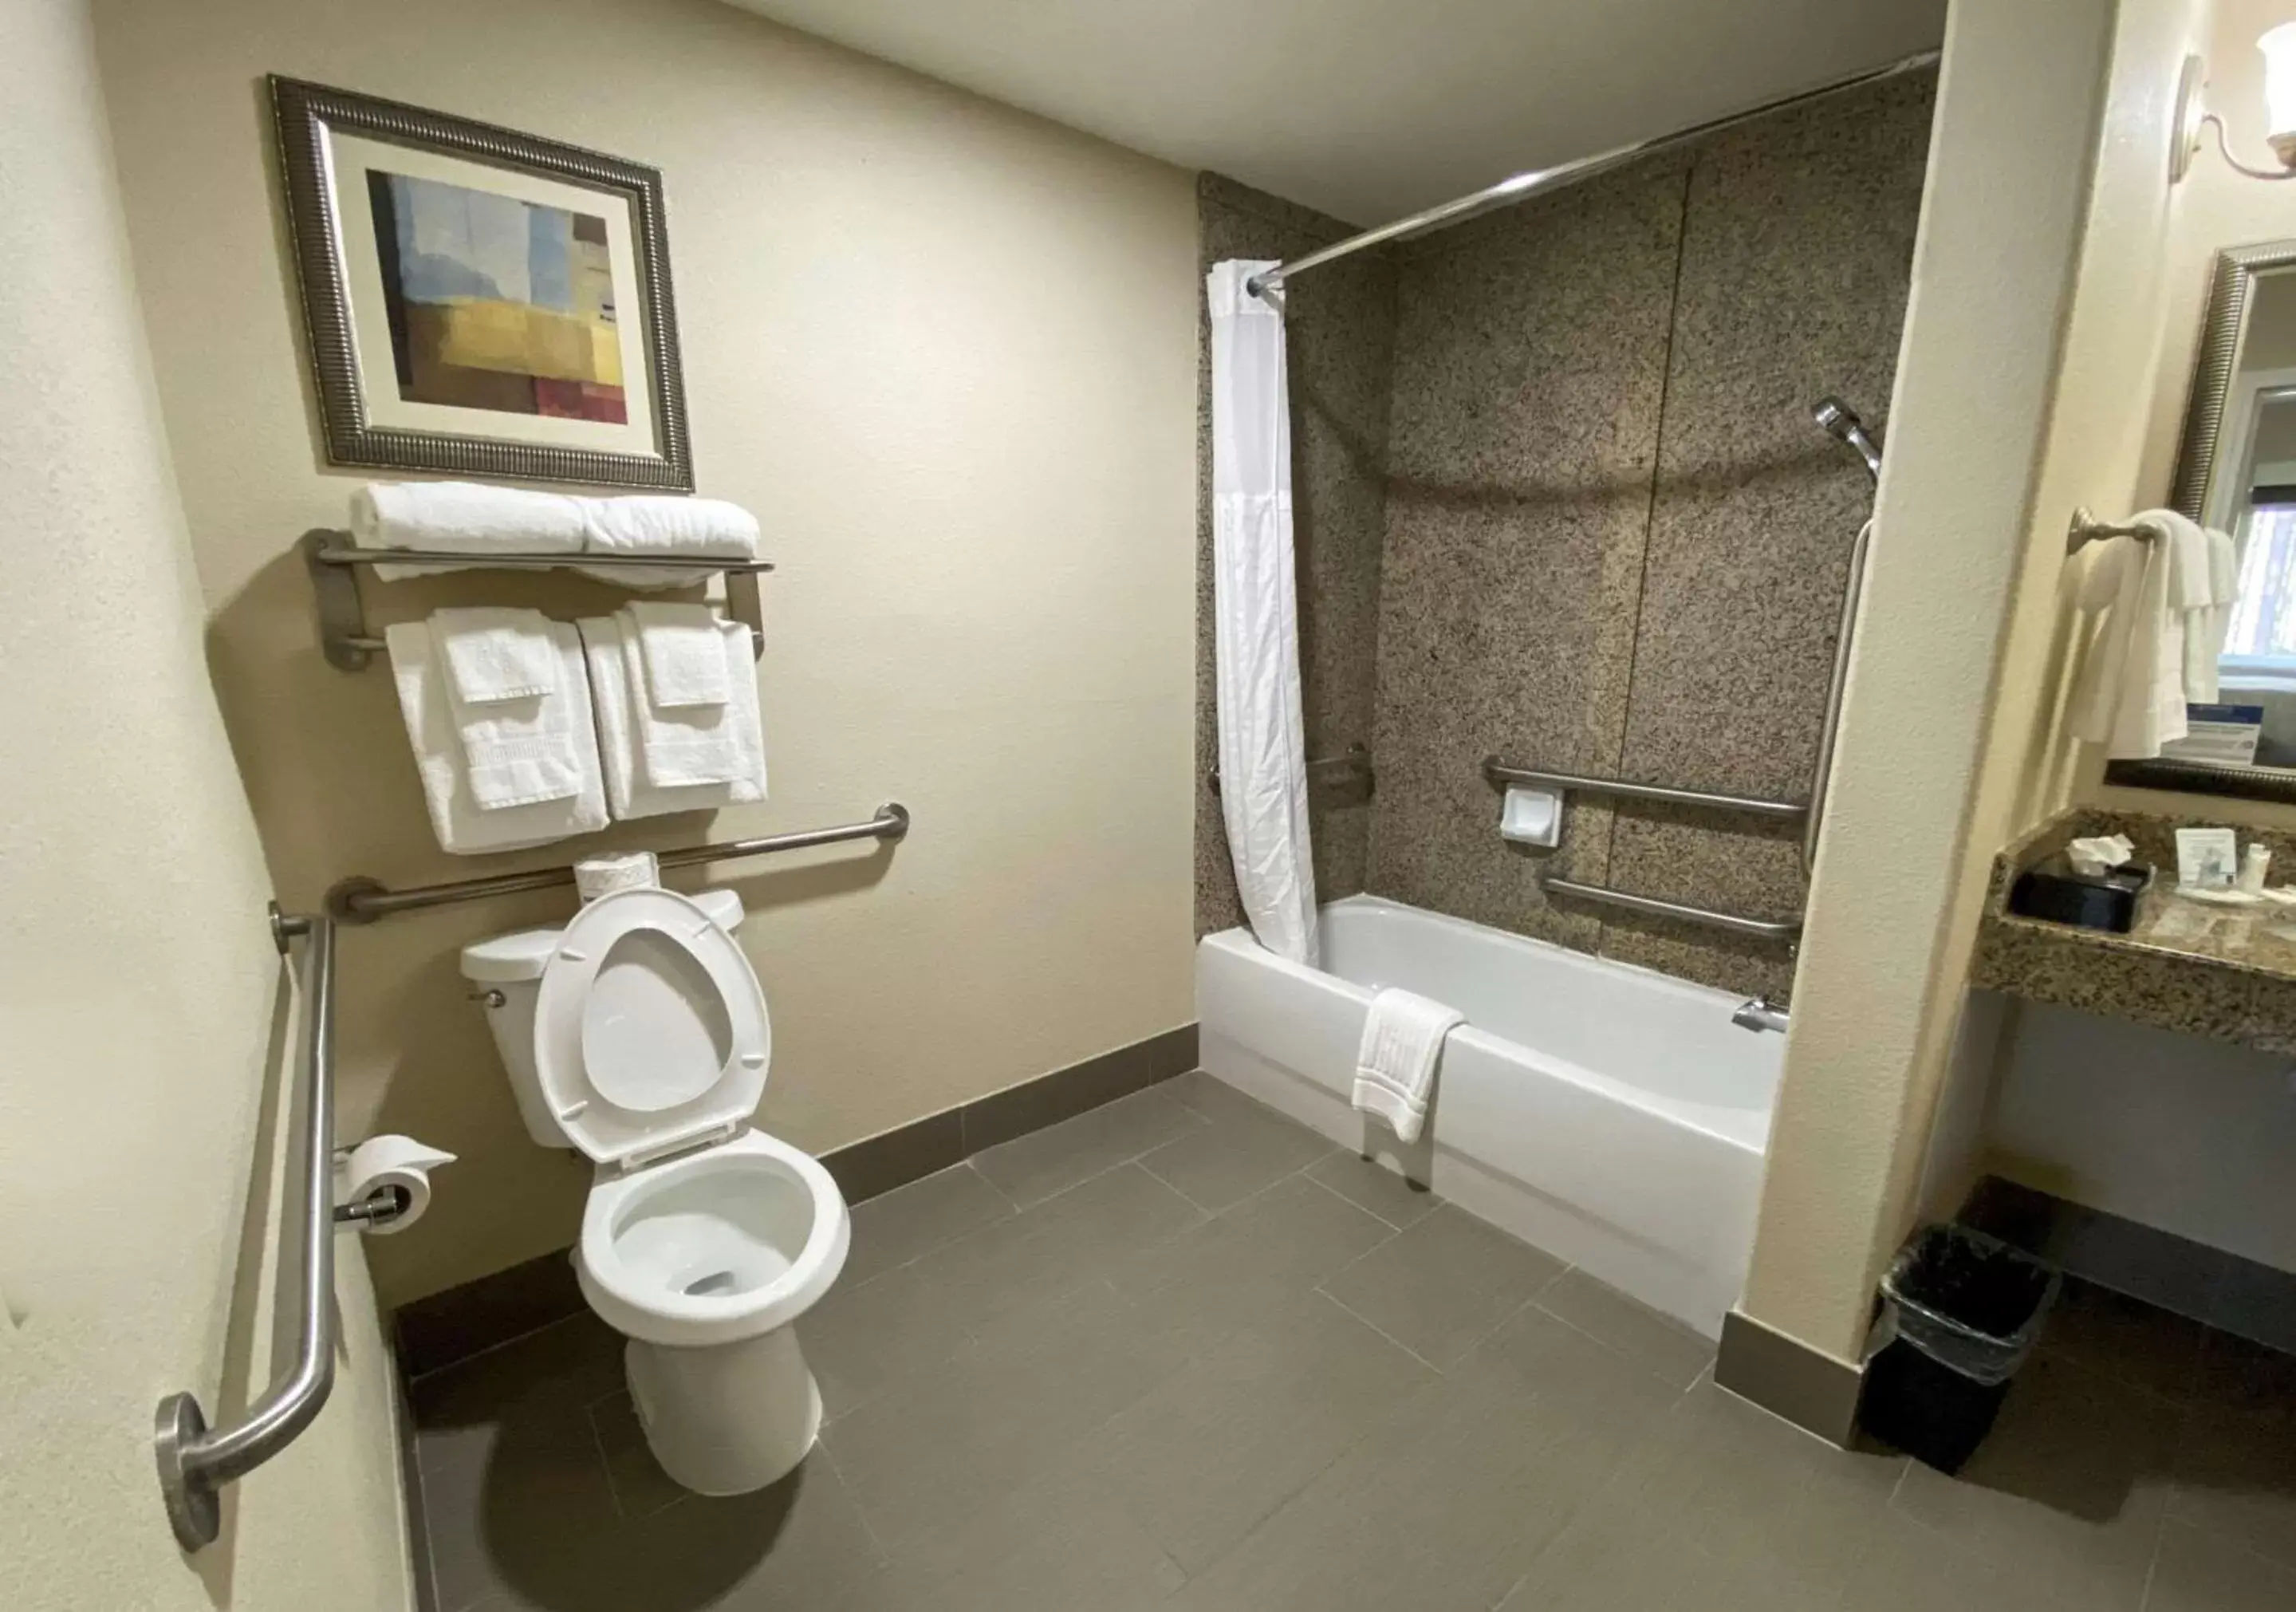 Bedroom, Bathroom in Comfort Suites by Choice Hotels, Kingsland, I-95, Kings Bay Naval Base